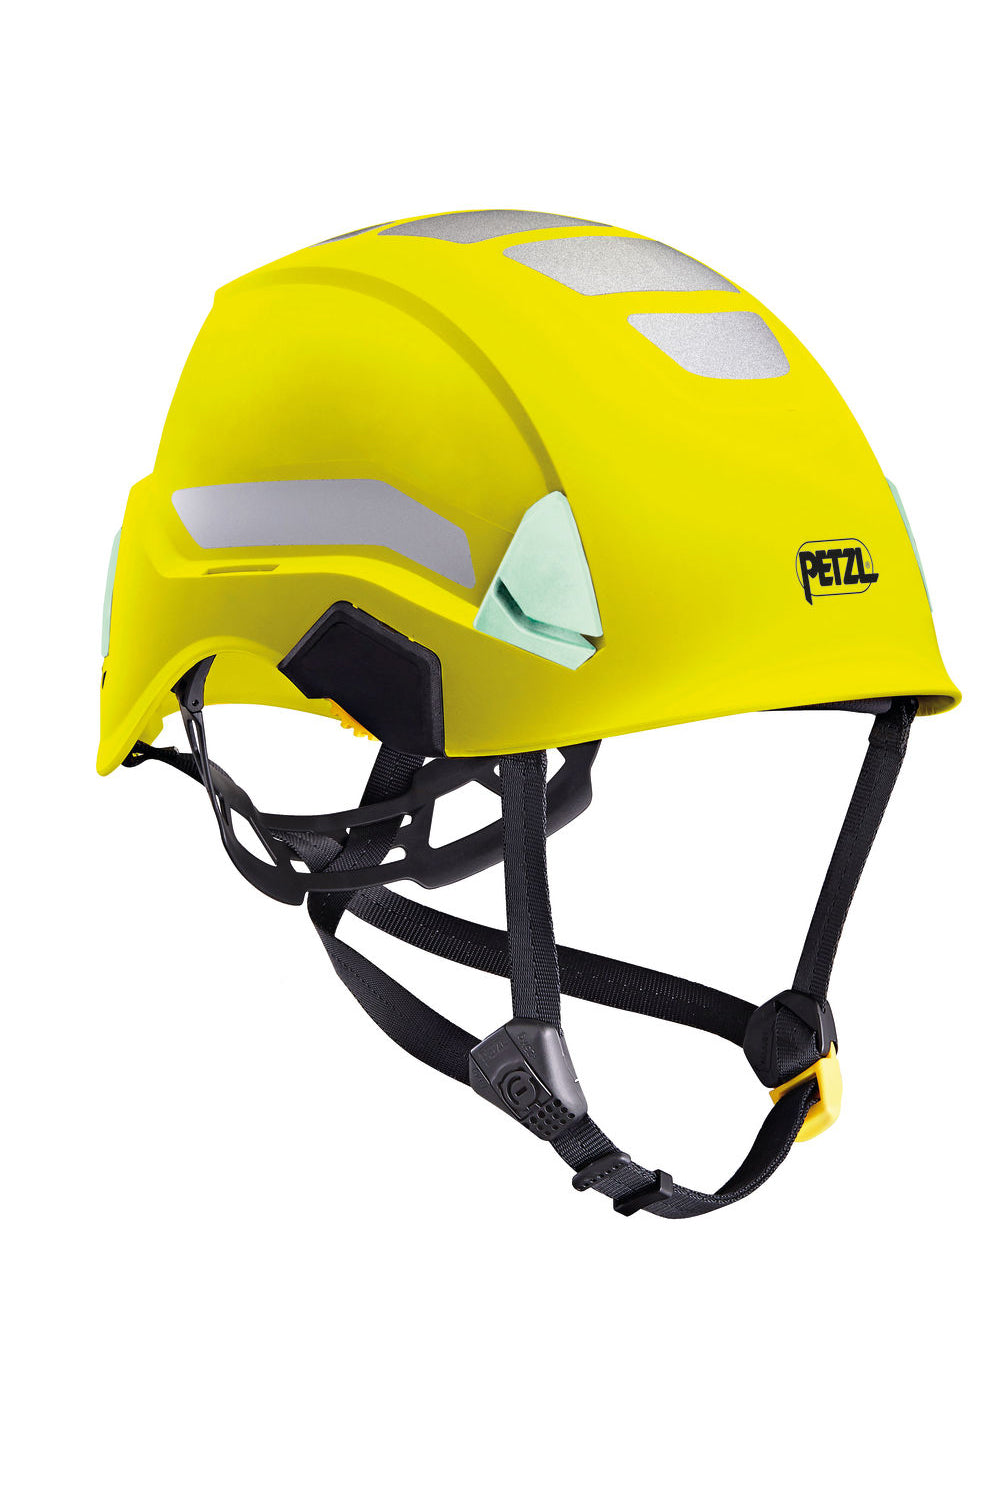 Petzl - Strato Hi-Viz Helmet